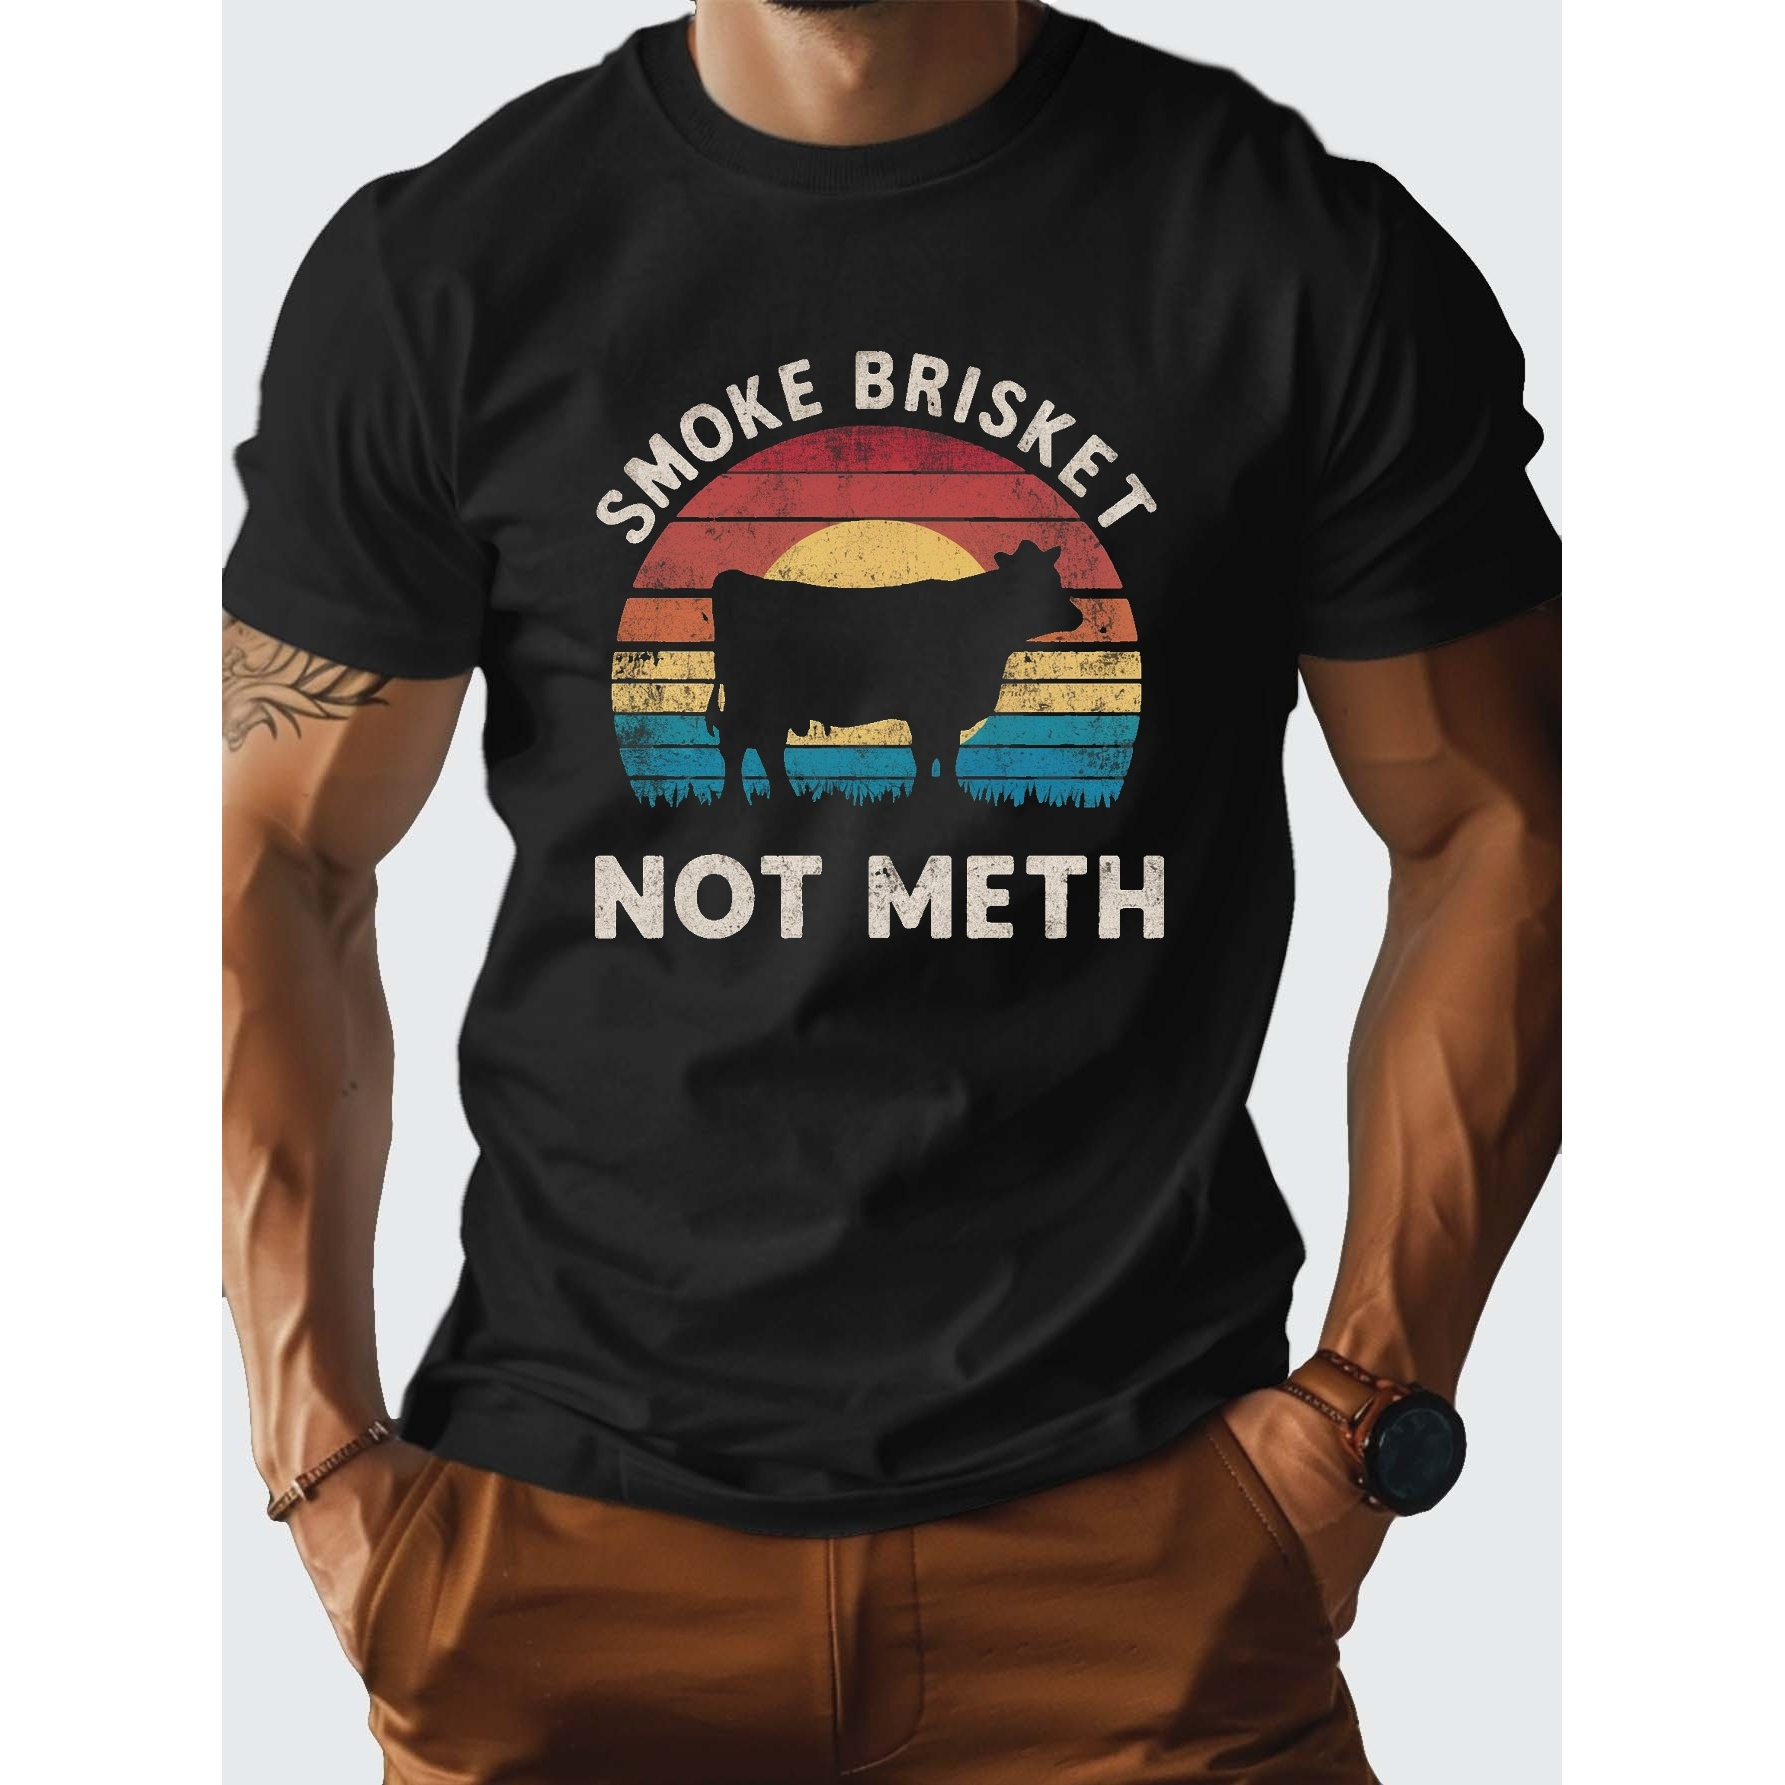 

Smoke Brisket Not Men's Cotton T-shirt, Comfortable Fit